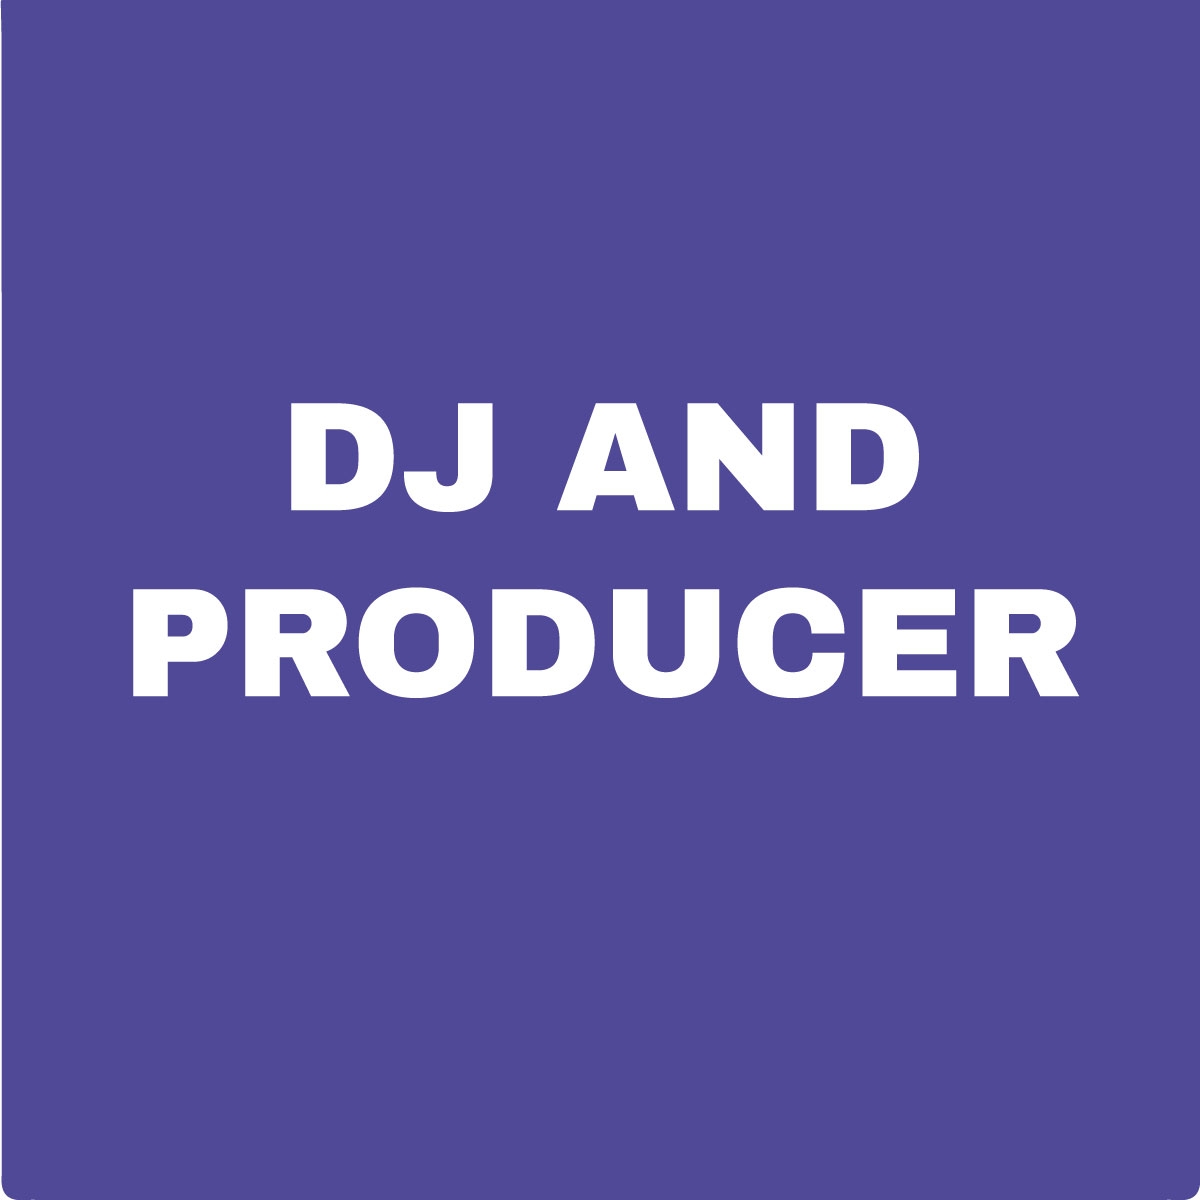 Dj Producer